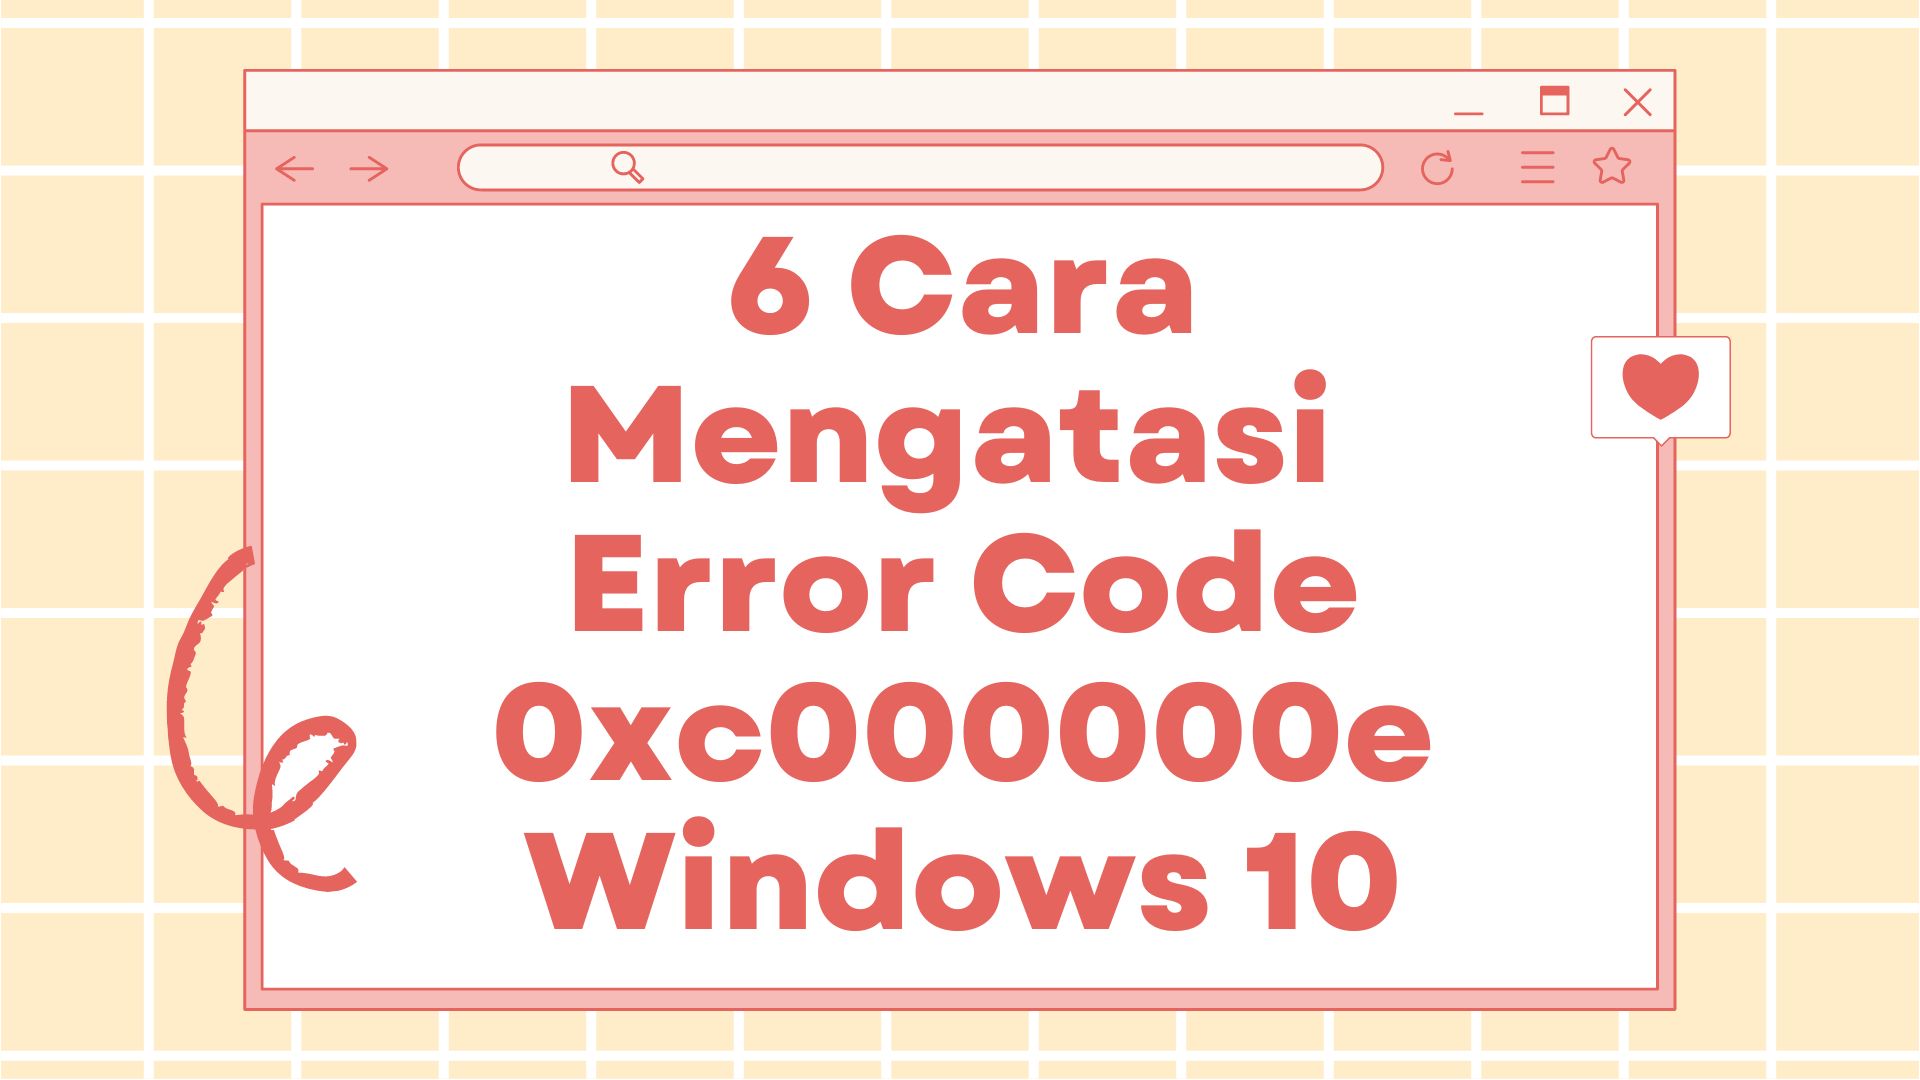 Error Code 0xc000000e